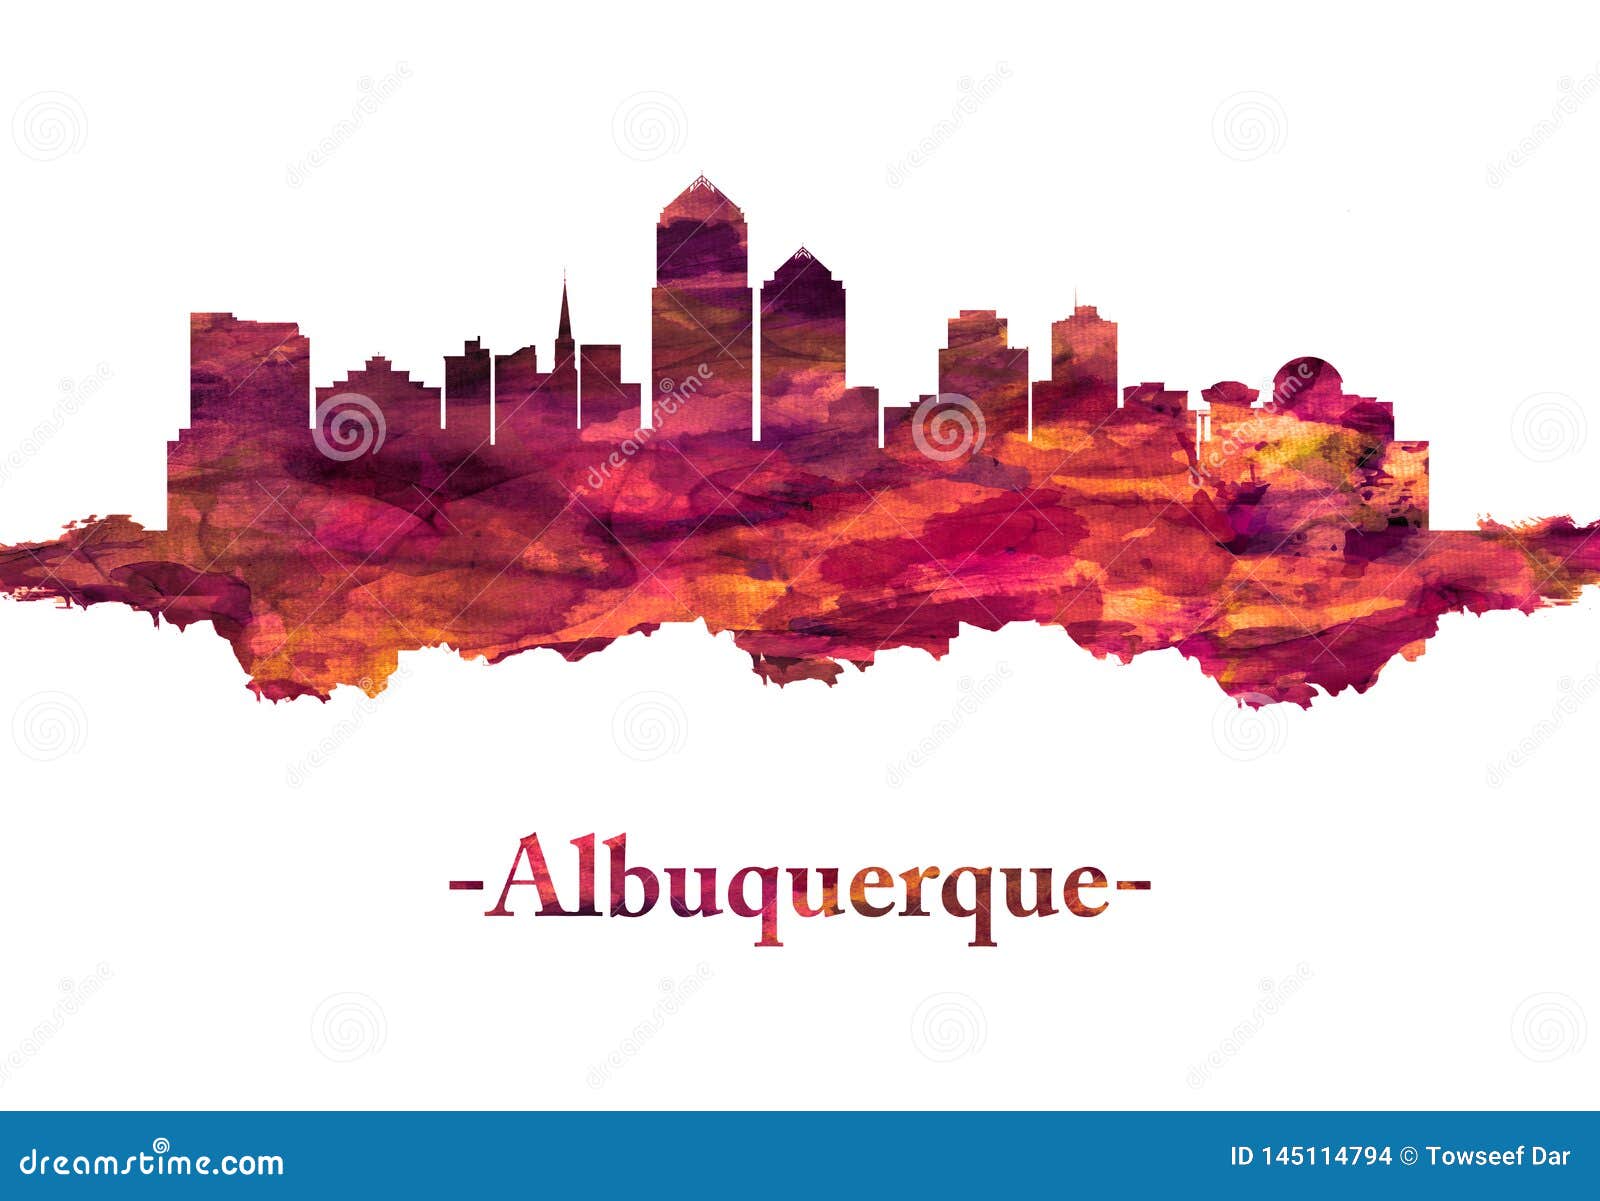 albuquerque new mexico skyline in red